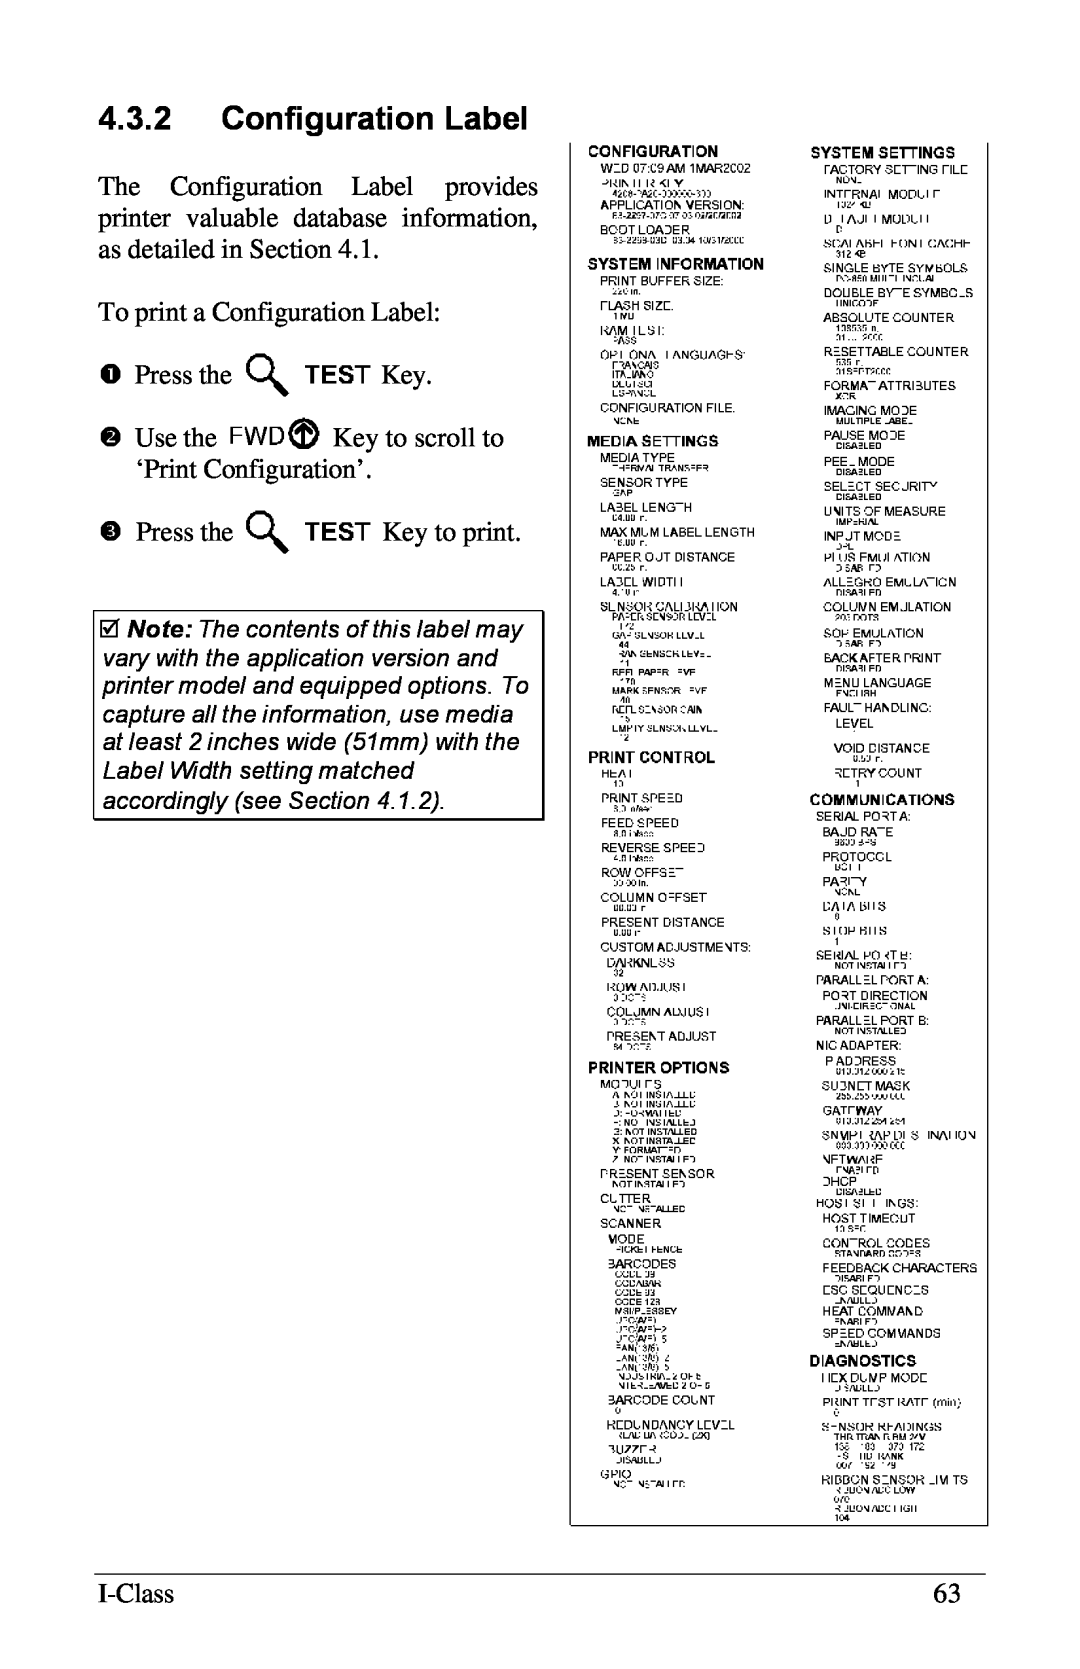 Xerox I Class manual 4.3.2Configuration Label 